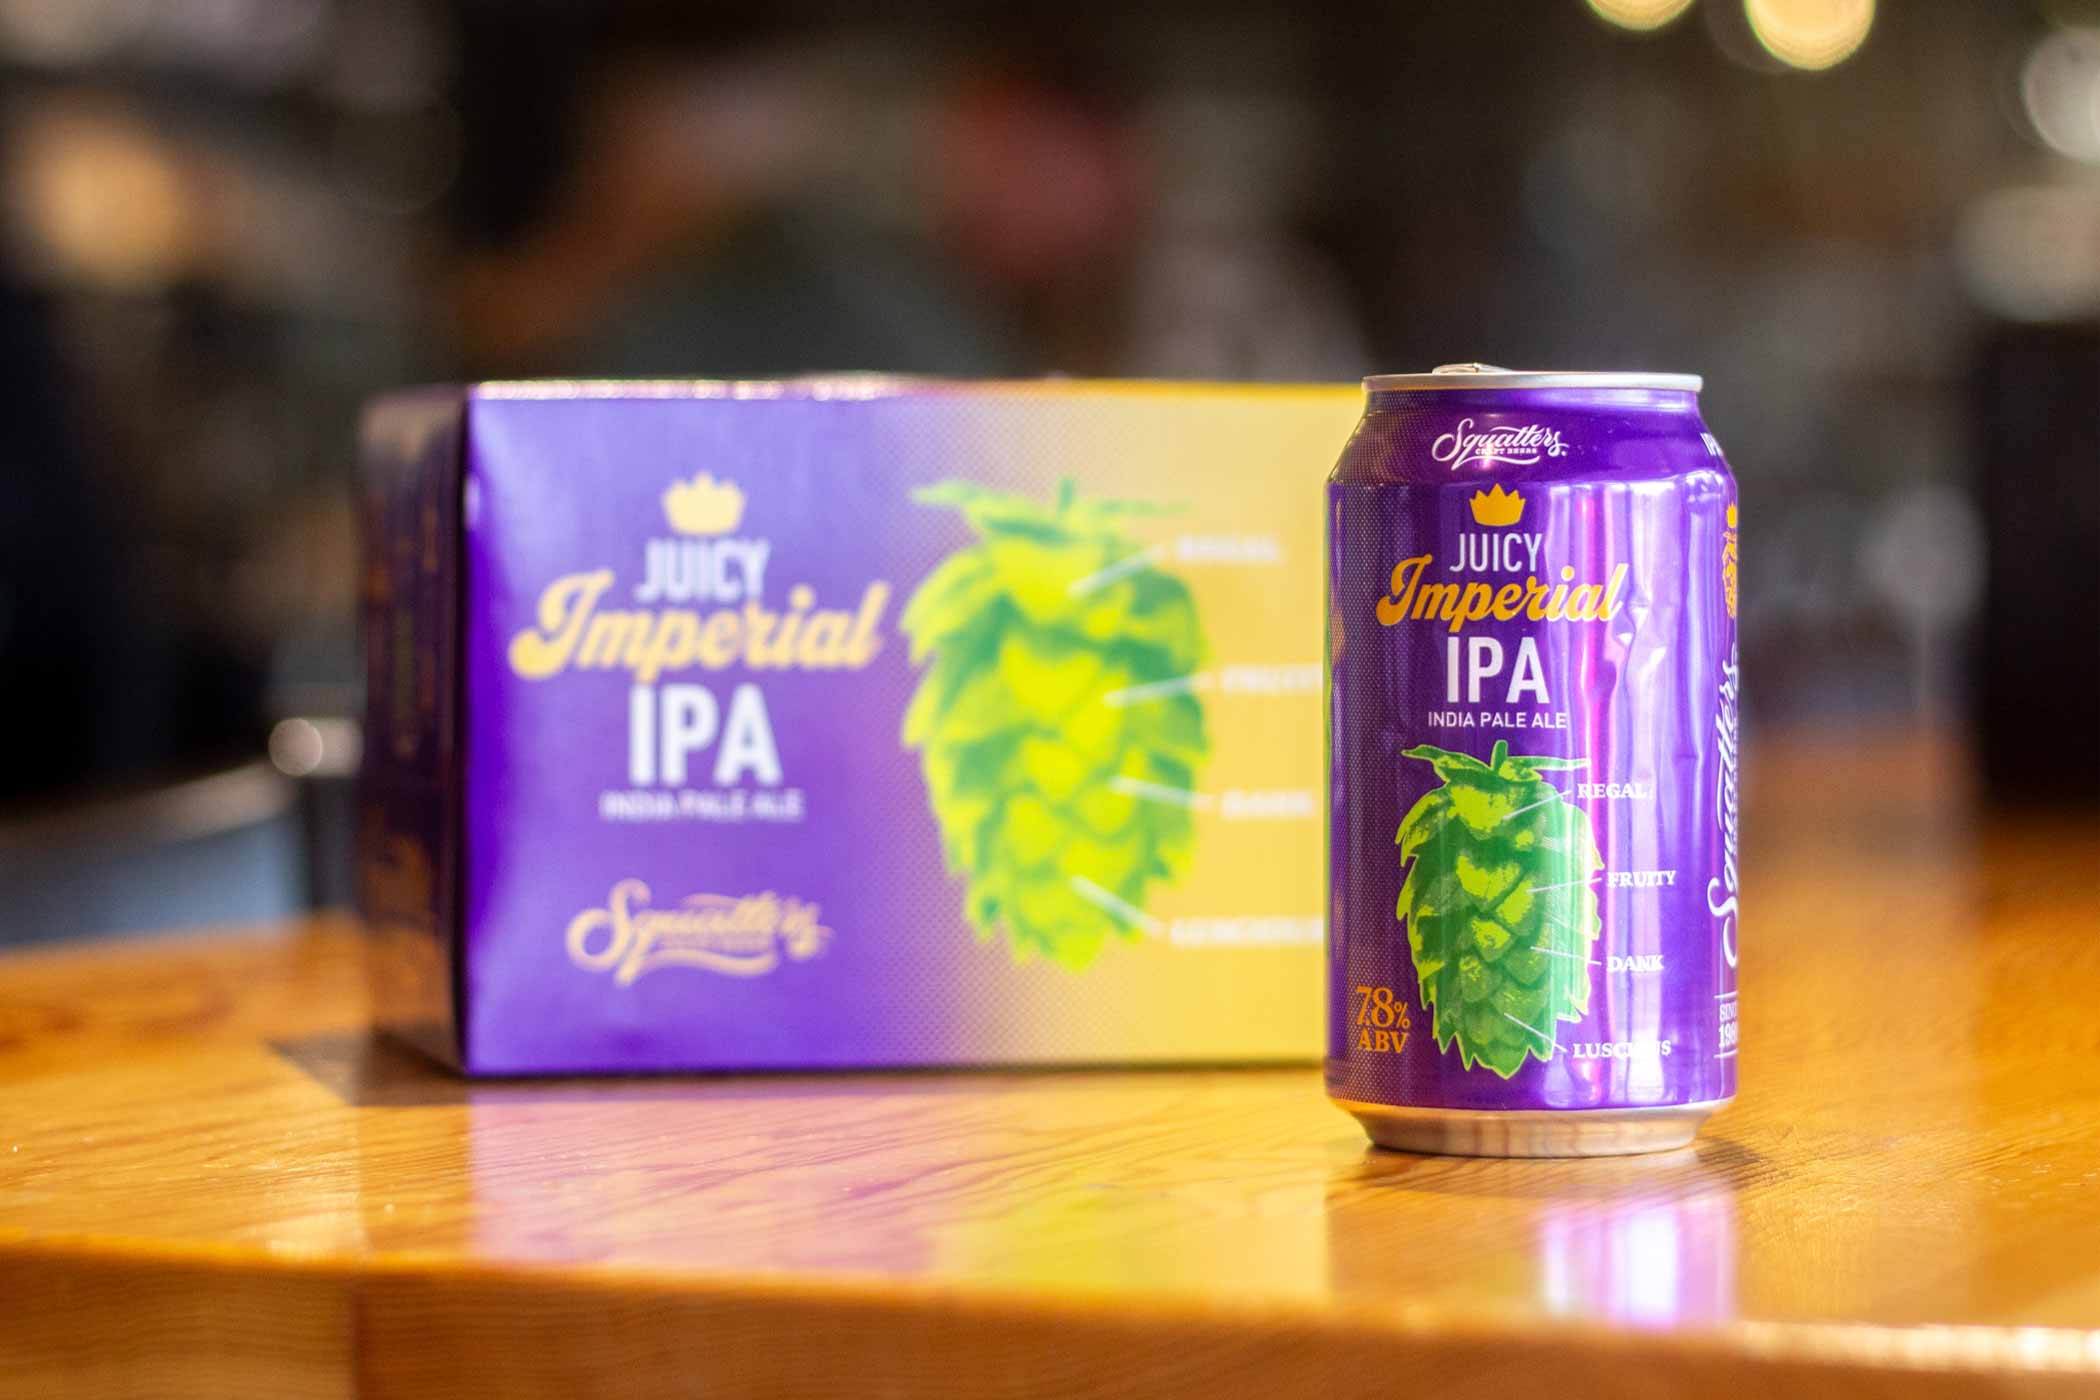 Squatters Juicy Imperial IPA: A Best-Selling Beer Gets Even Juicier